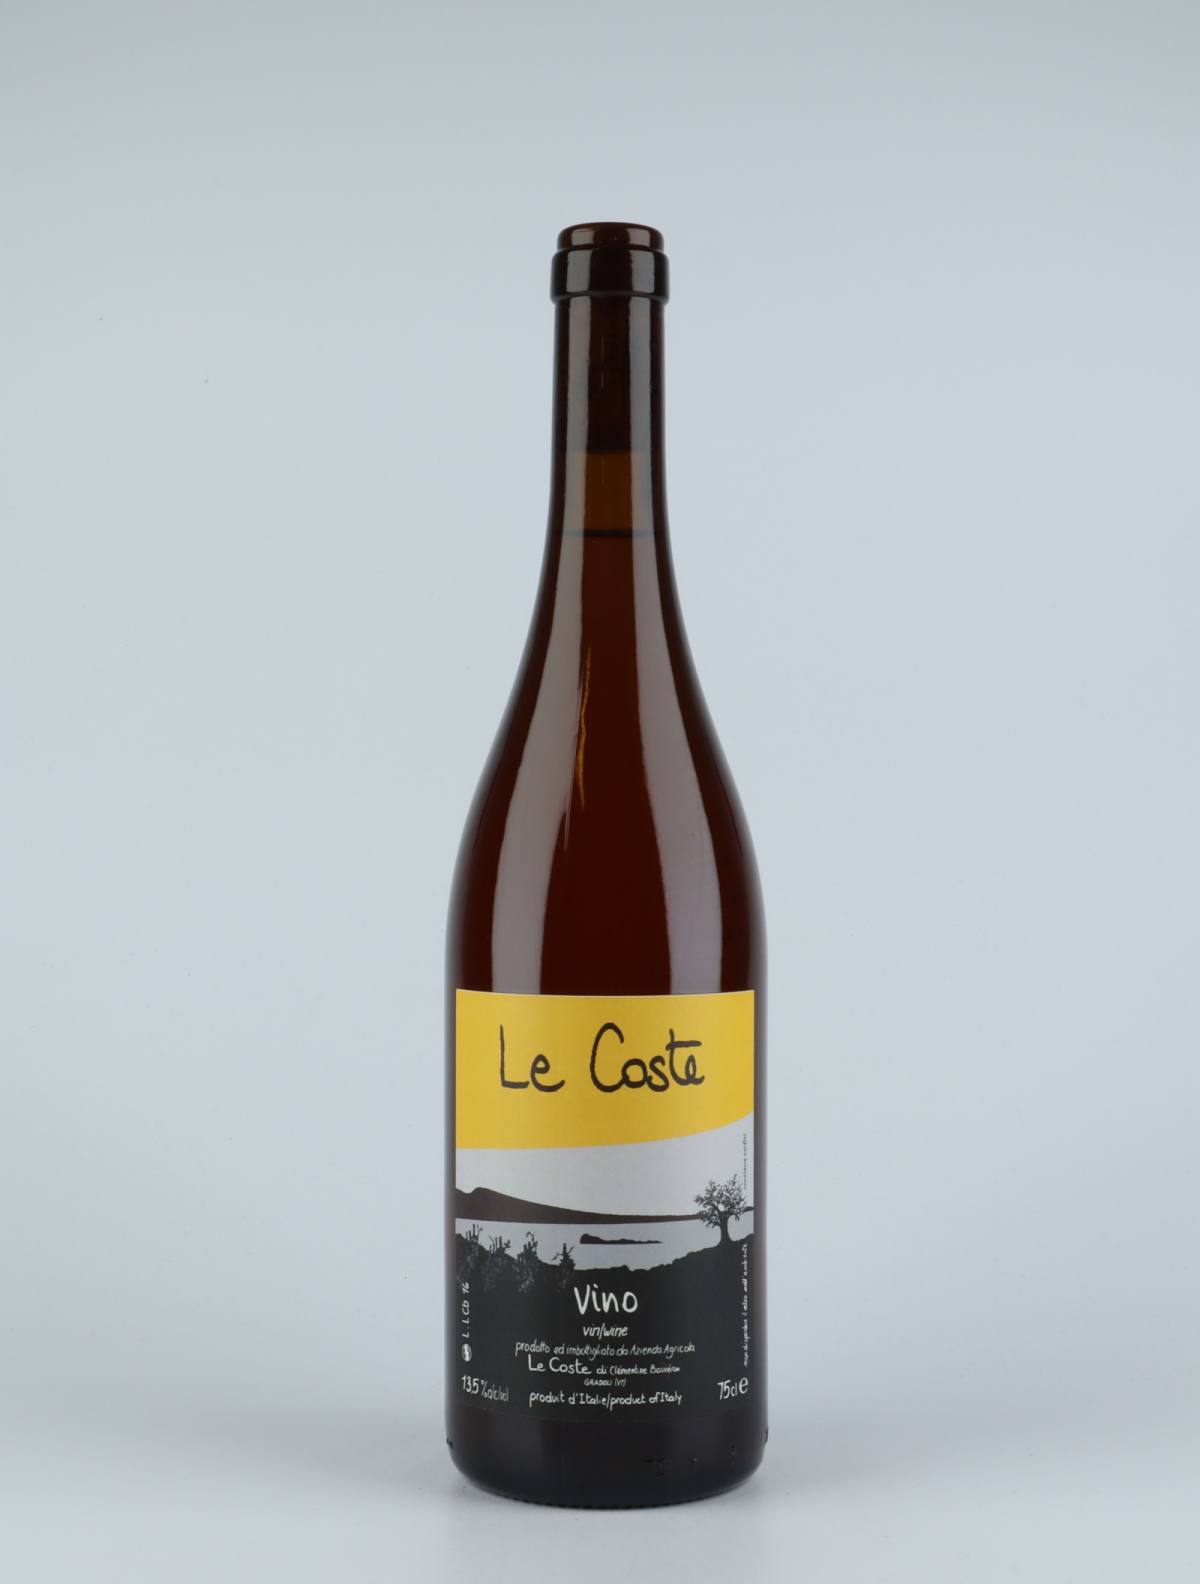 A bottle 2016 Le Coste Bianco White wine from Le Coste, Lazio in Italy